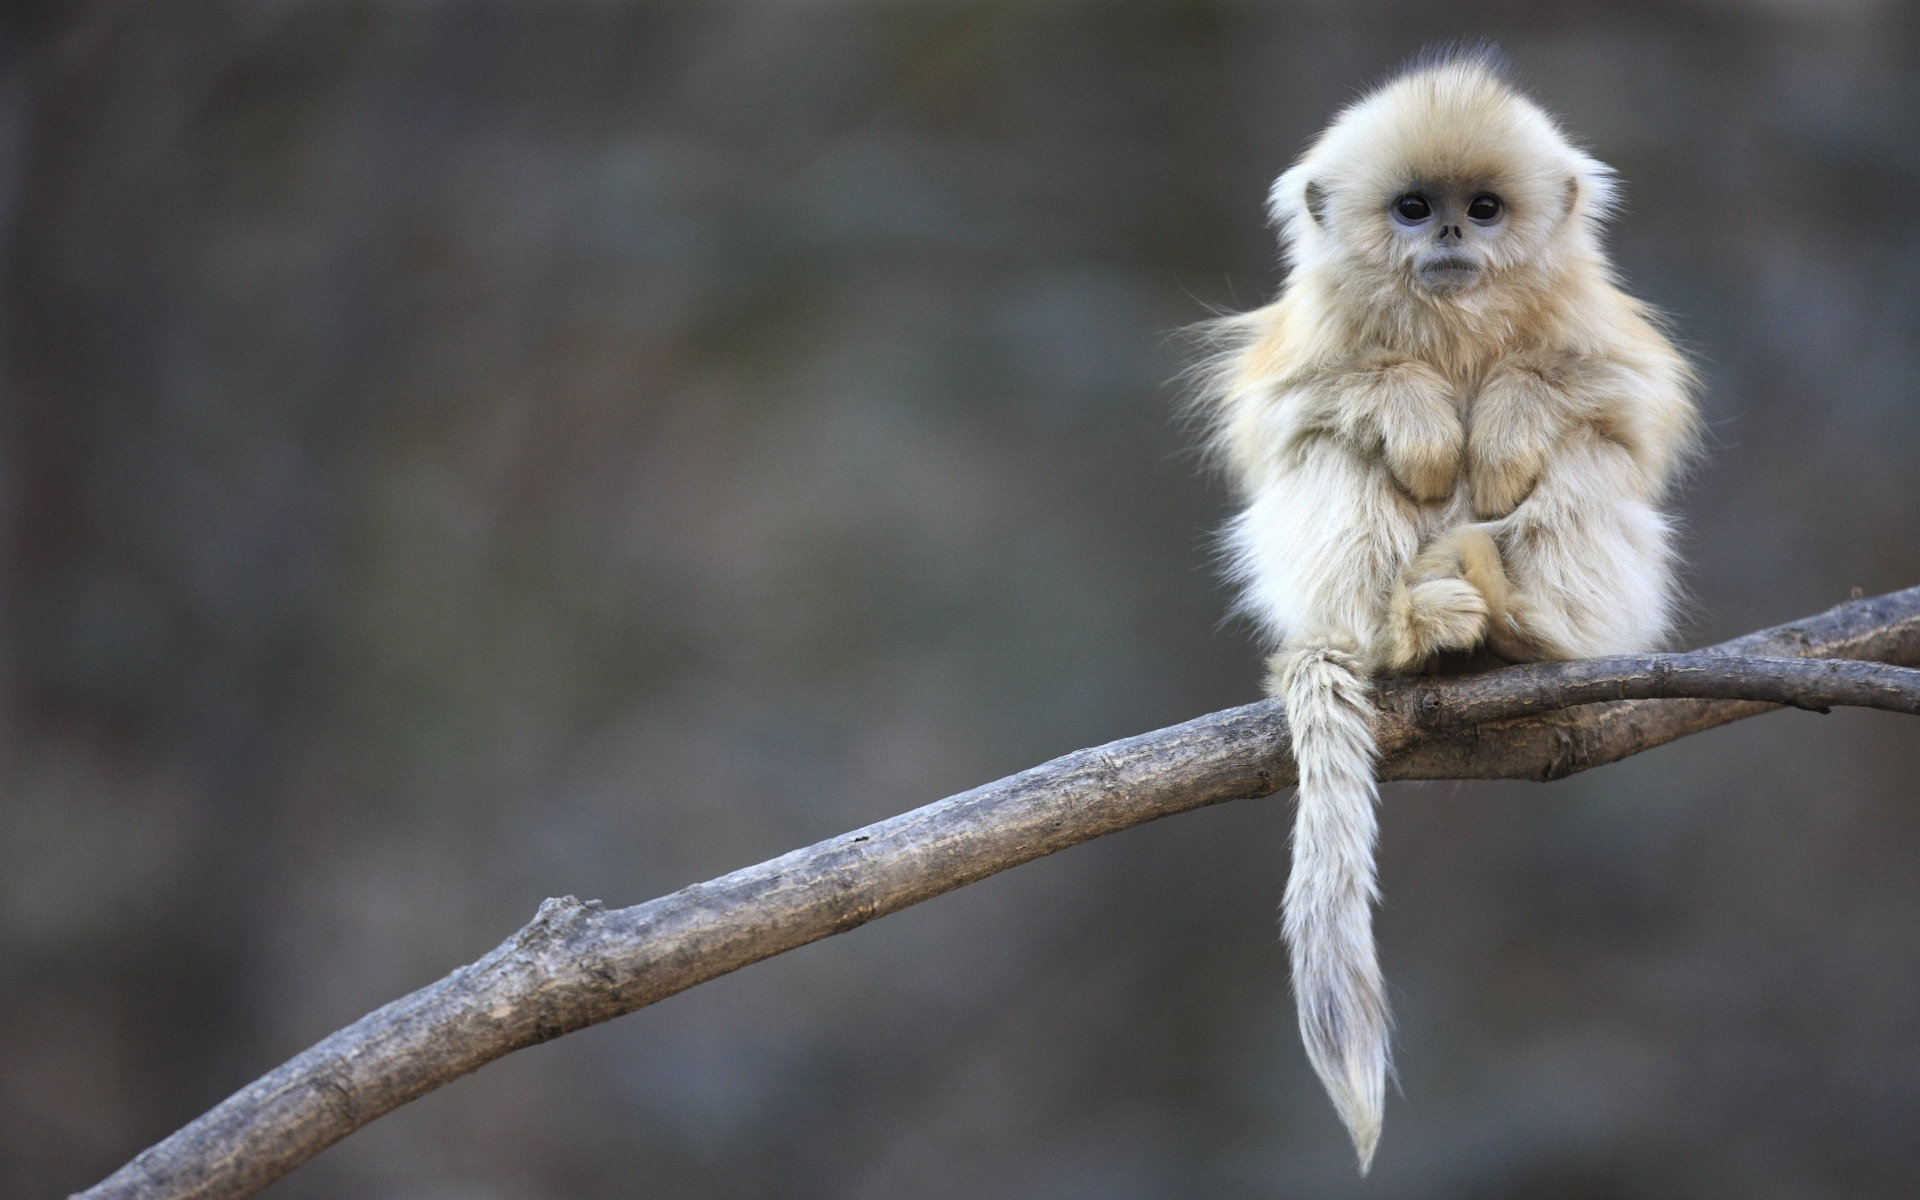 Cute shaggy macaque